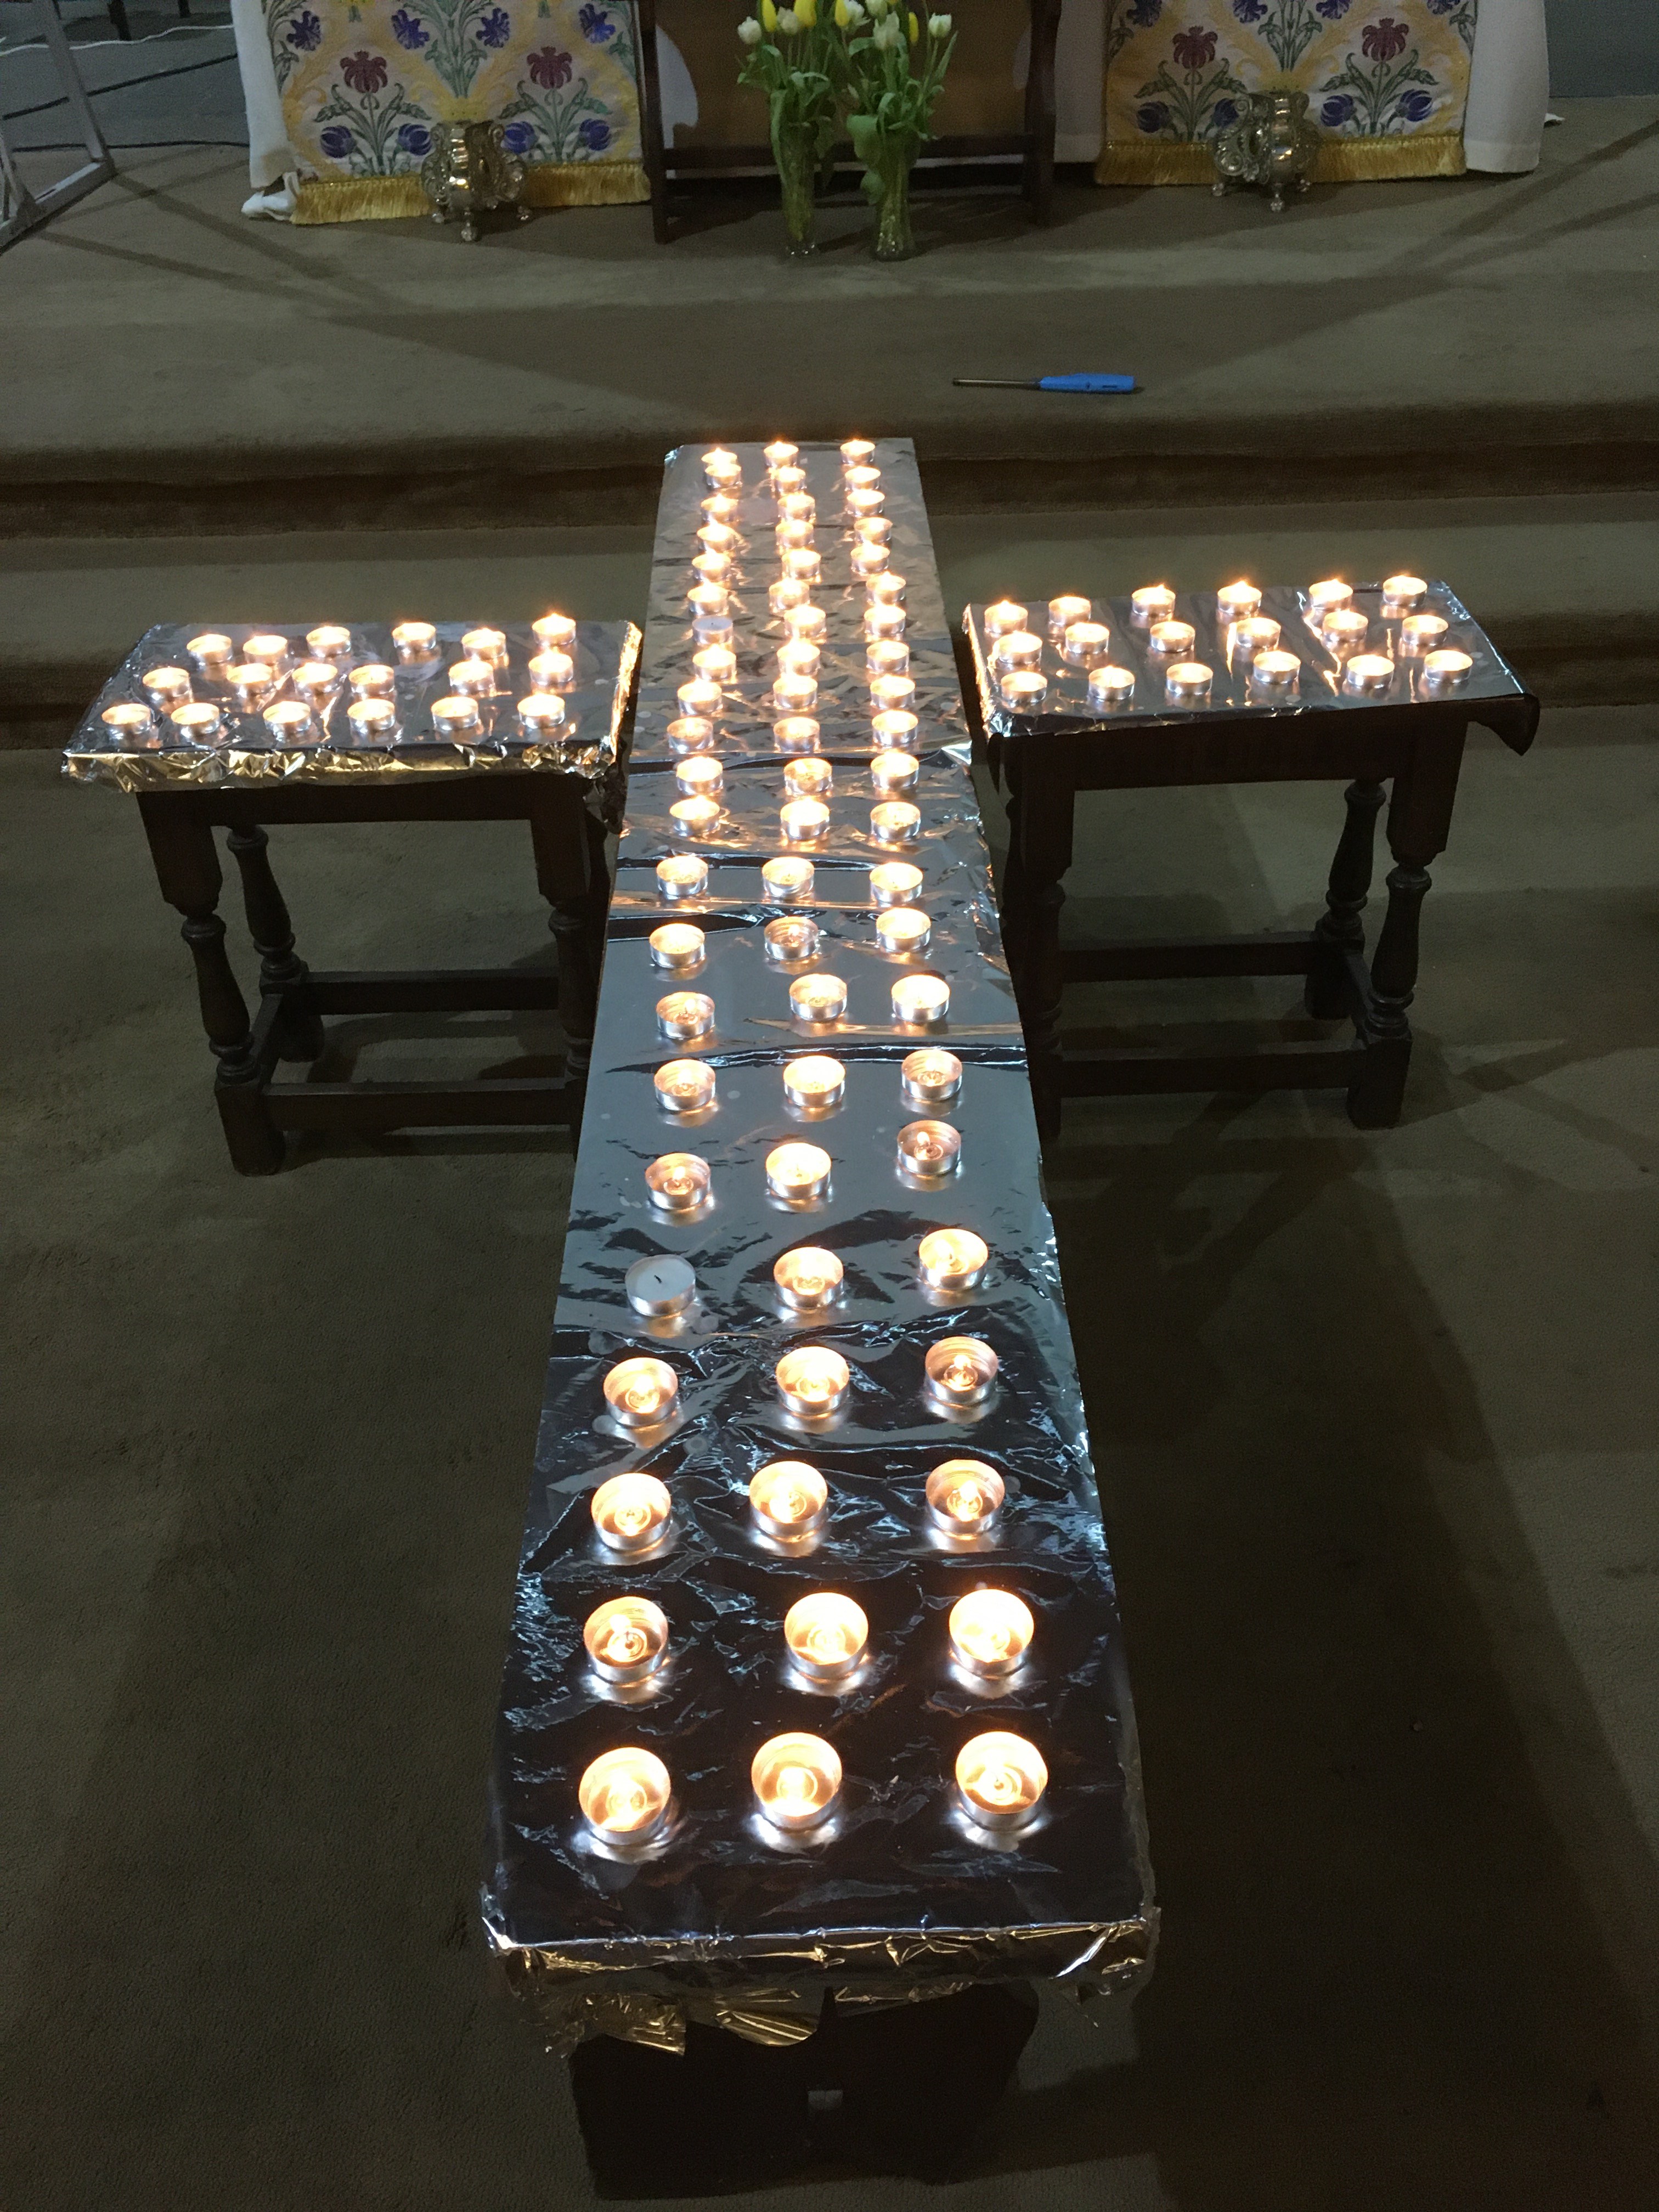 Memorial Service candles